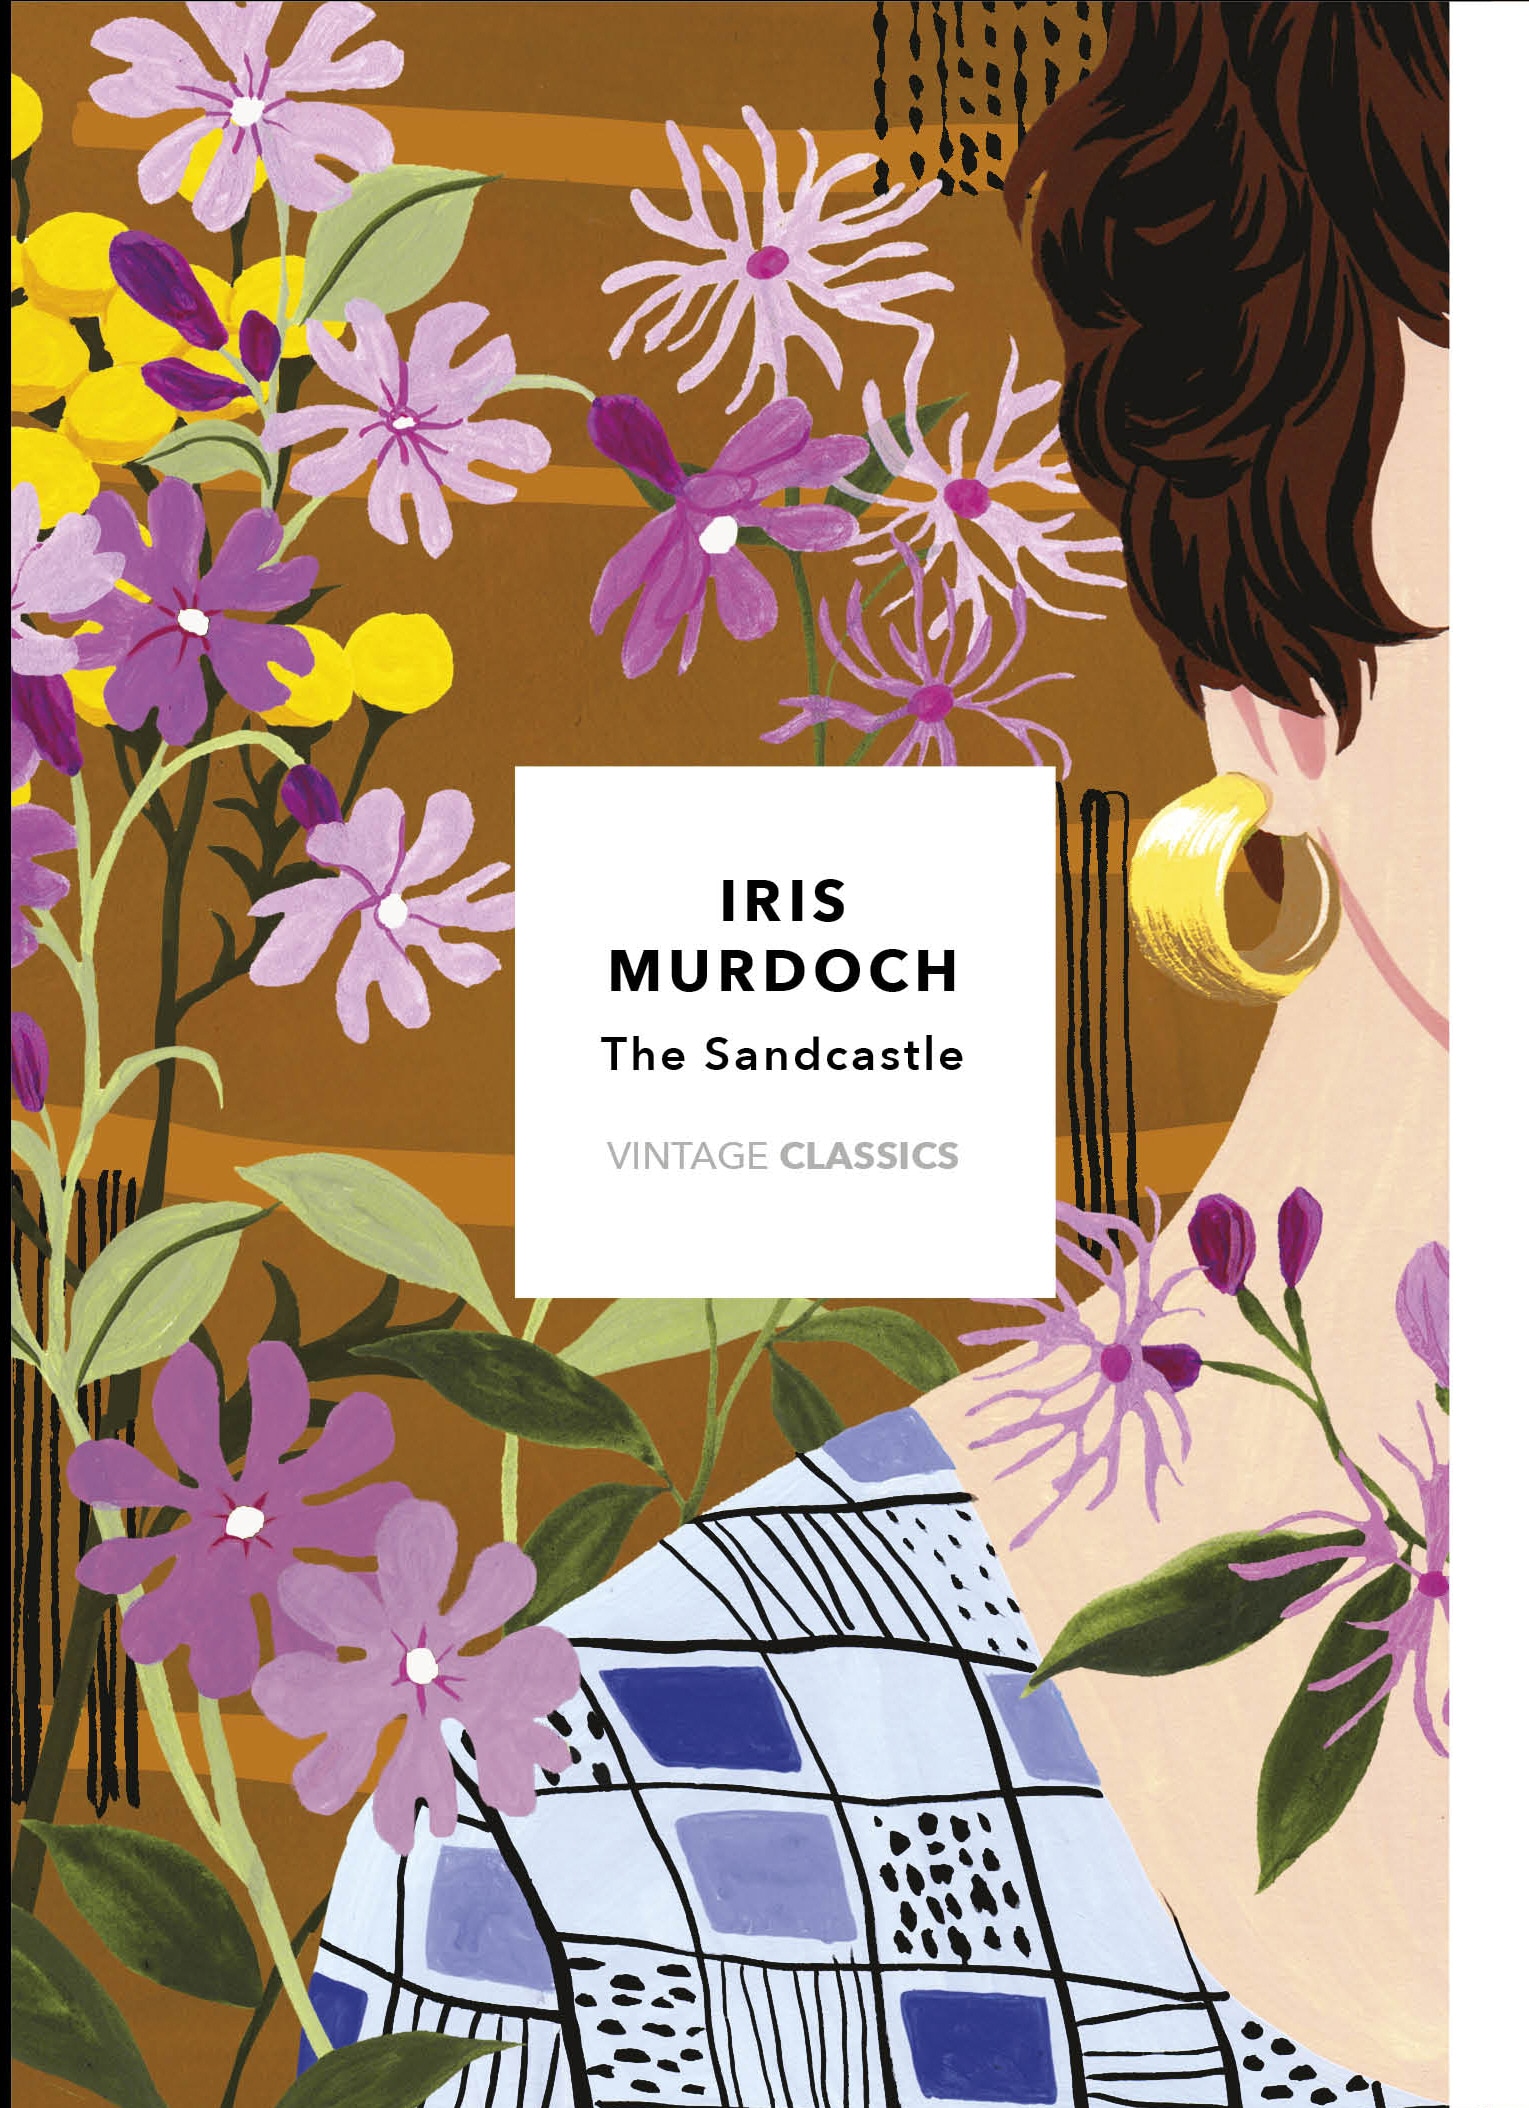 Book “The Sandcastle (Vintage Classics Murdoch Series)” by Iris Murdoch, Bidisha SK Mamata — July 4, 2019